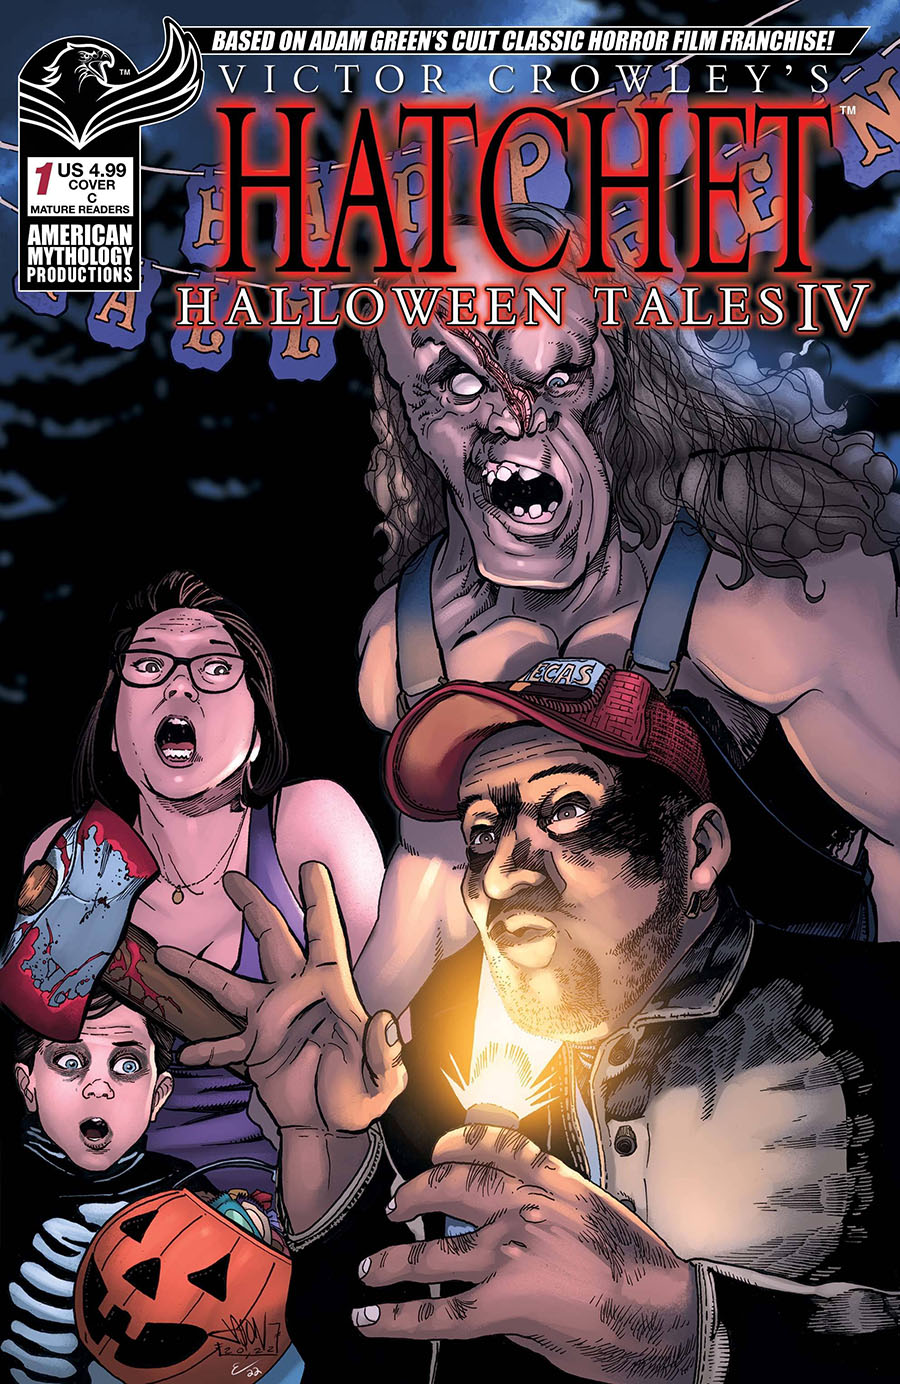 Victor Crowleys Hatchet Halloween Tales IV #1 Cover C Variant Jason Craig Storytime Cover